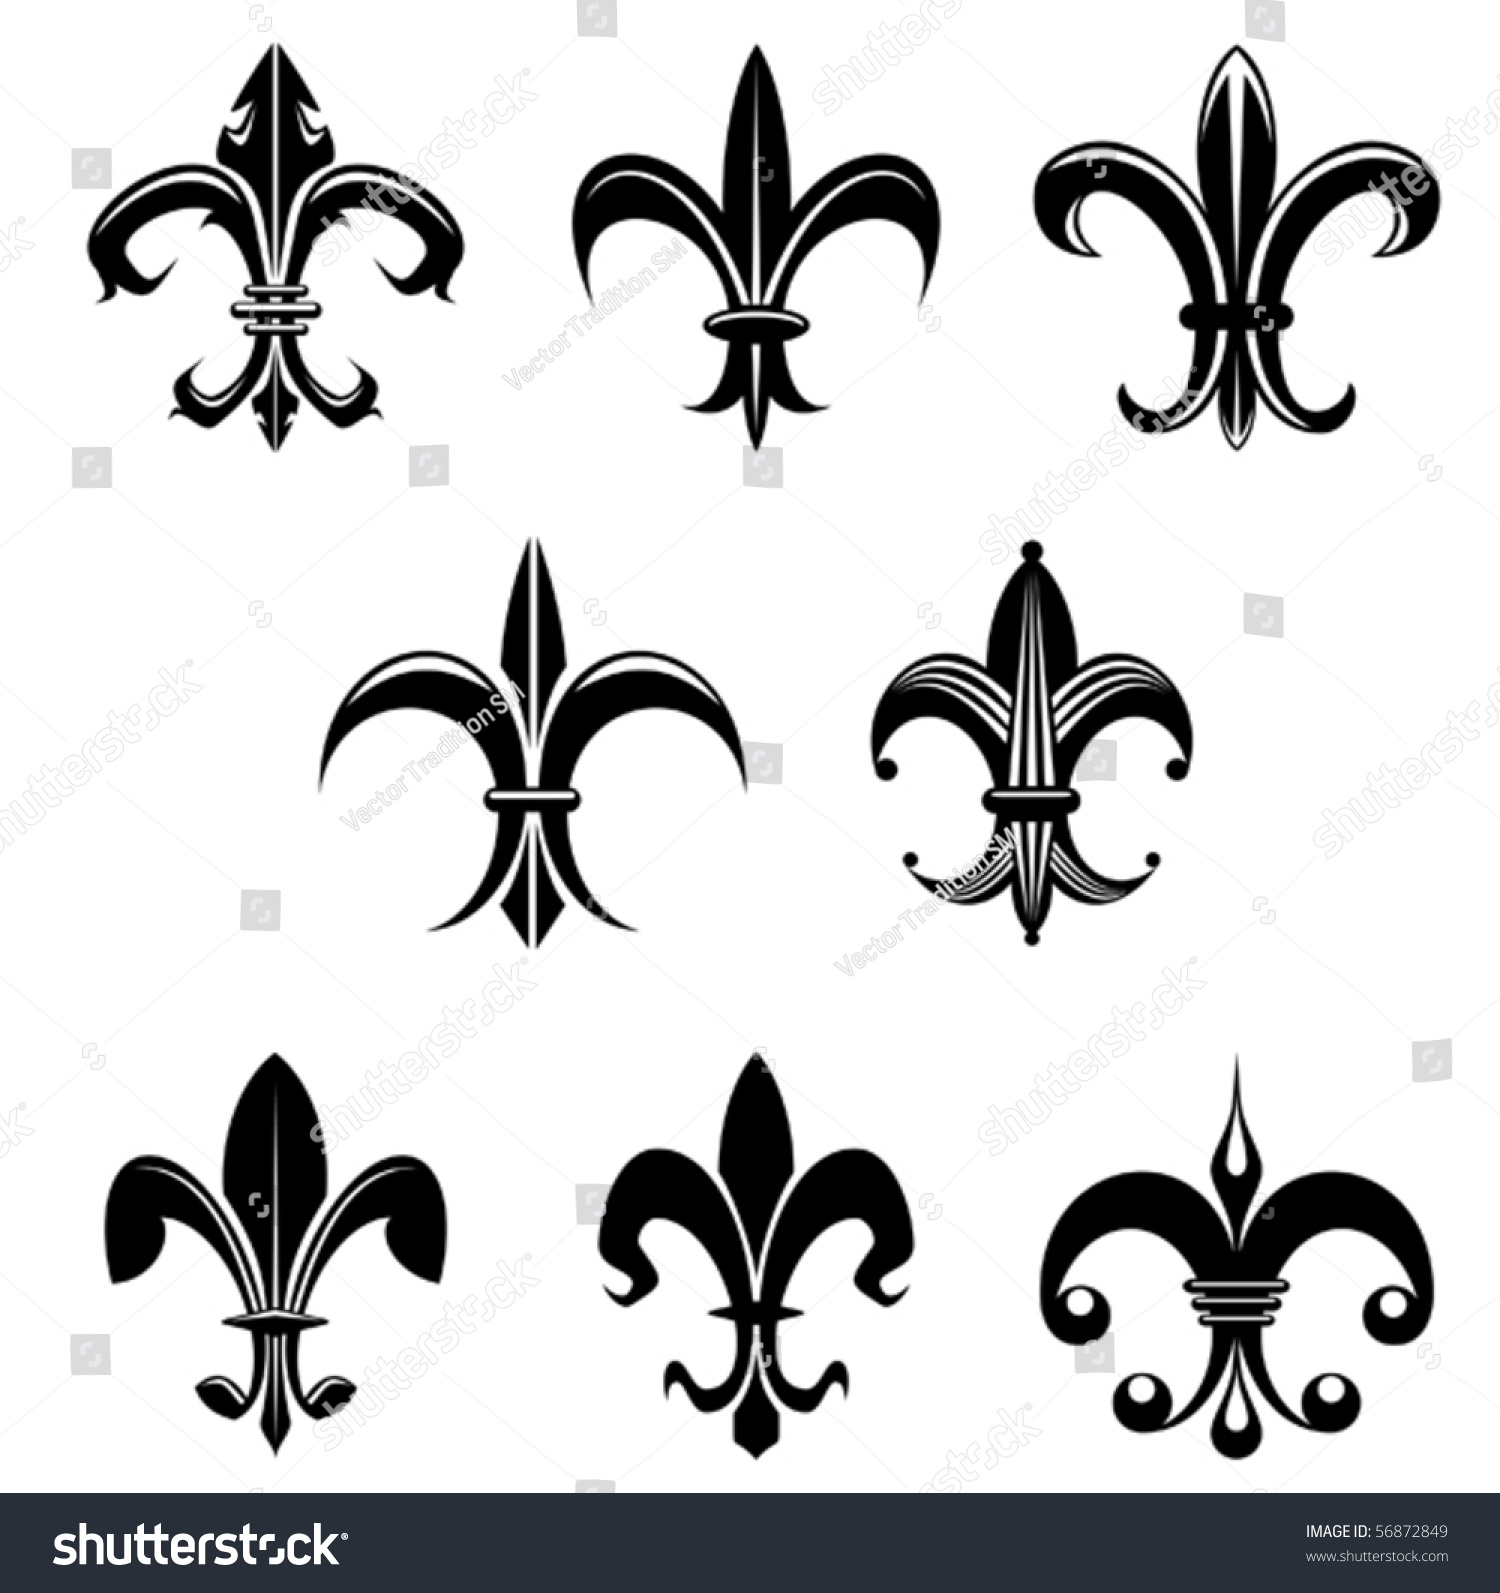 Royal French Lily Symbols Emblem Logo Stock Vector 56872849 - Shutterstock